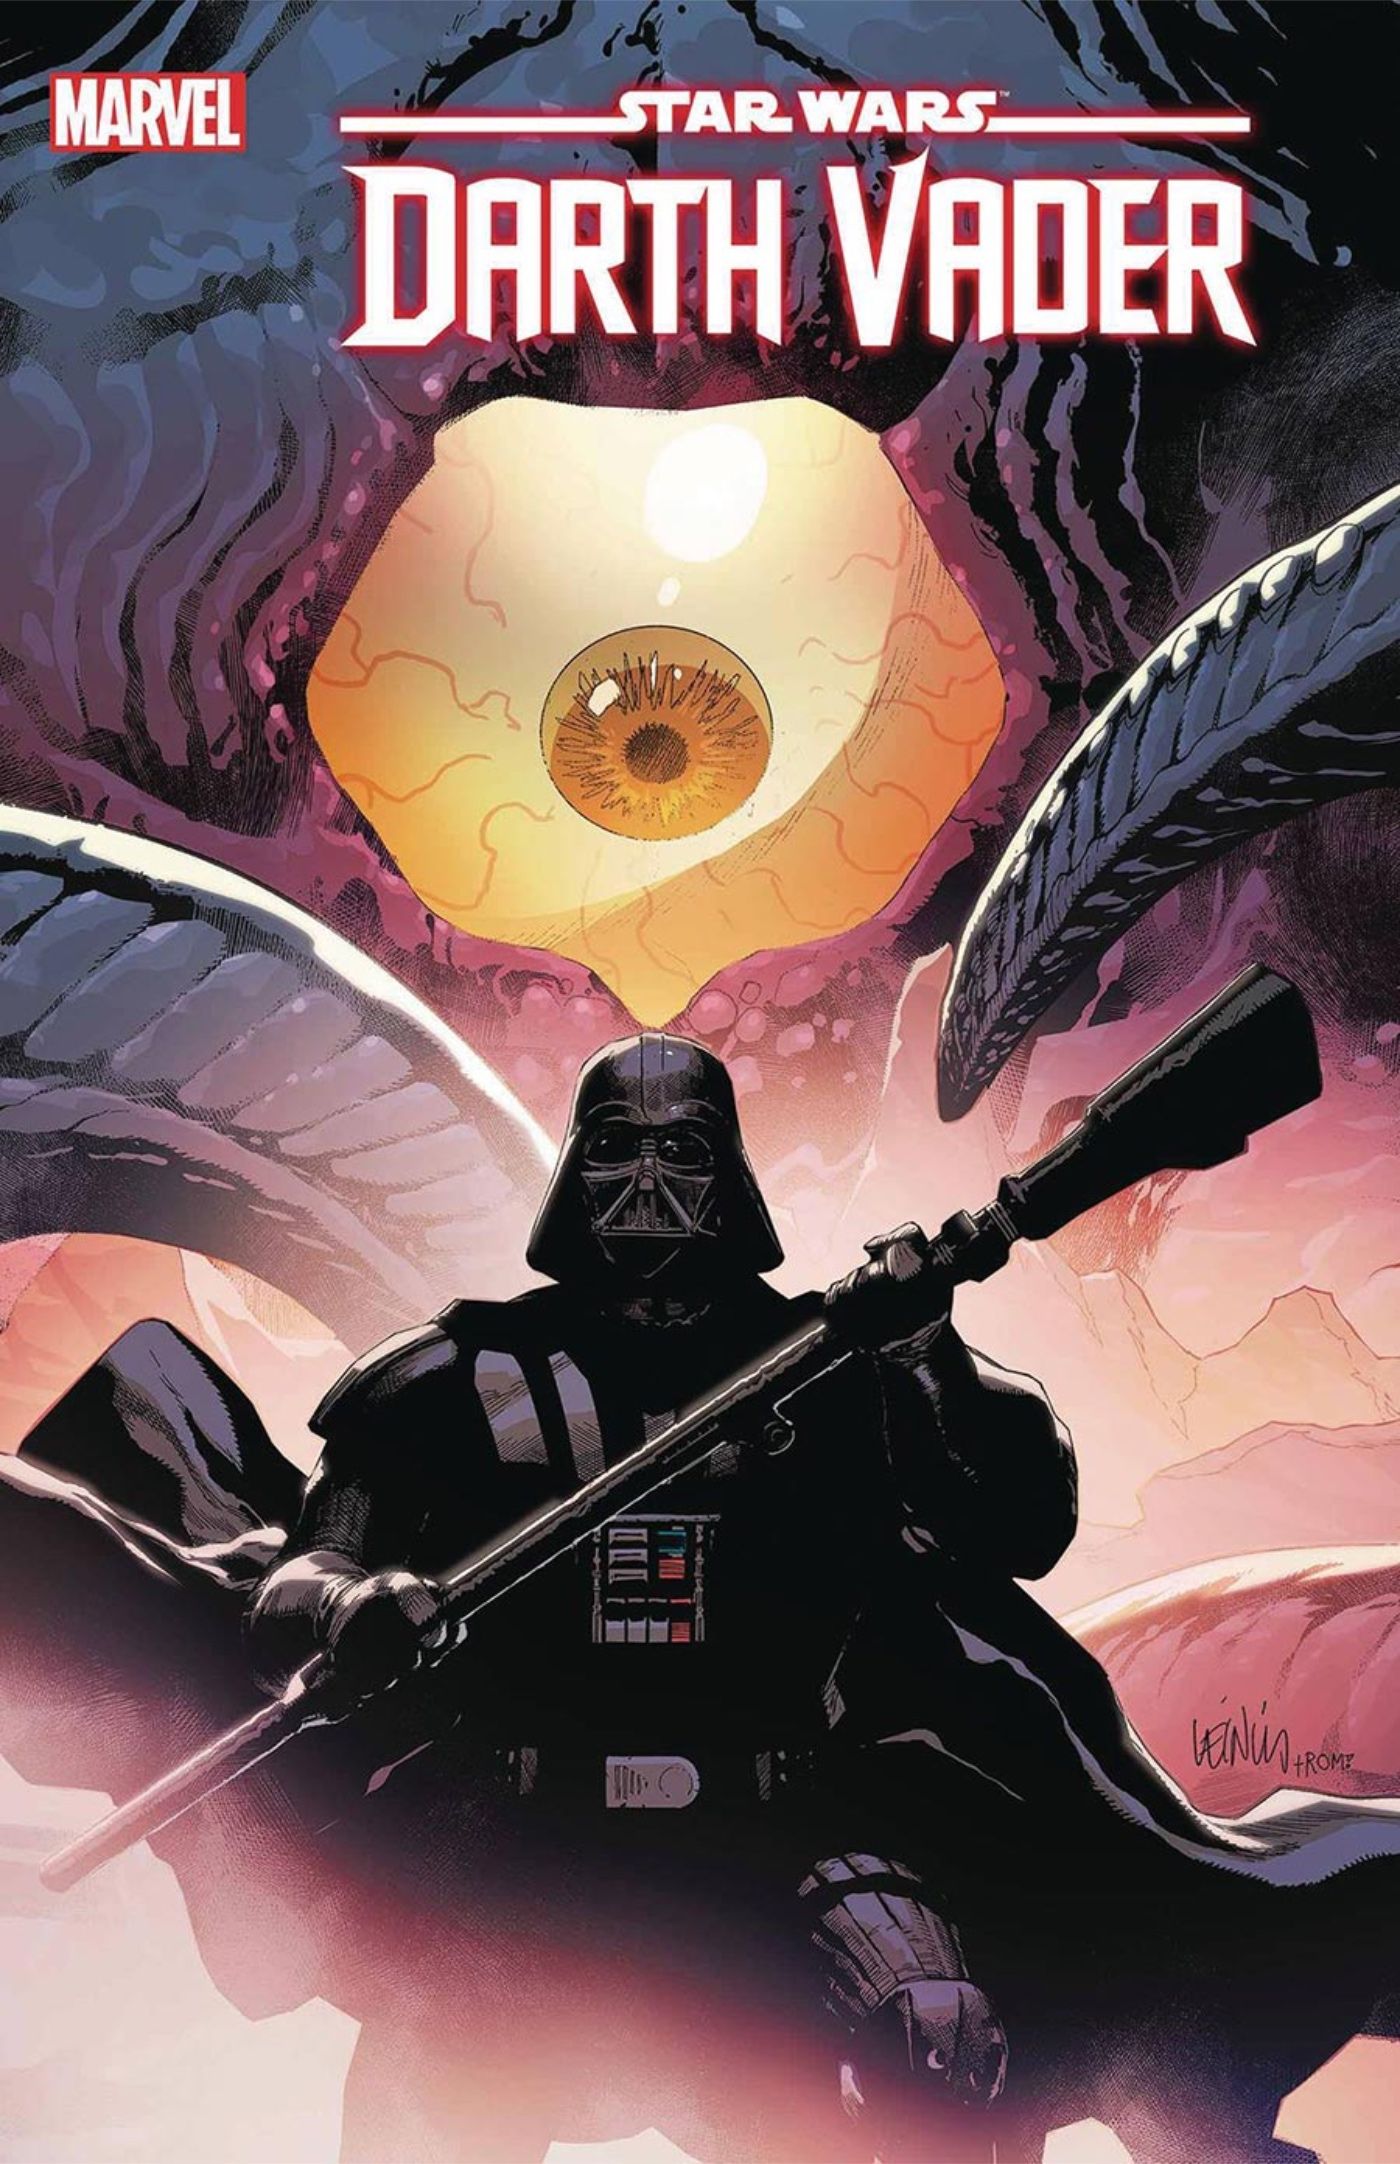 Darth Vader #47 Cover Art